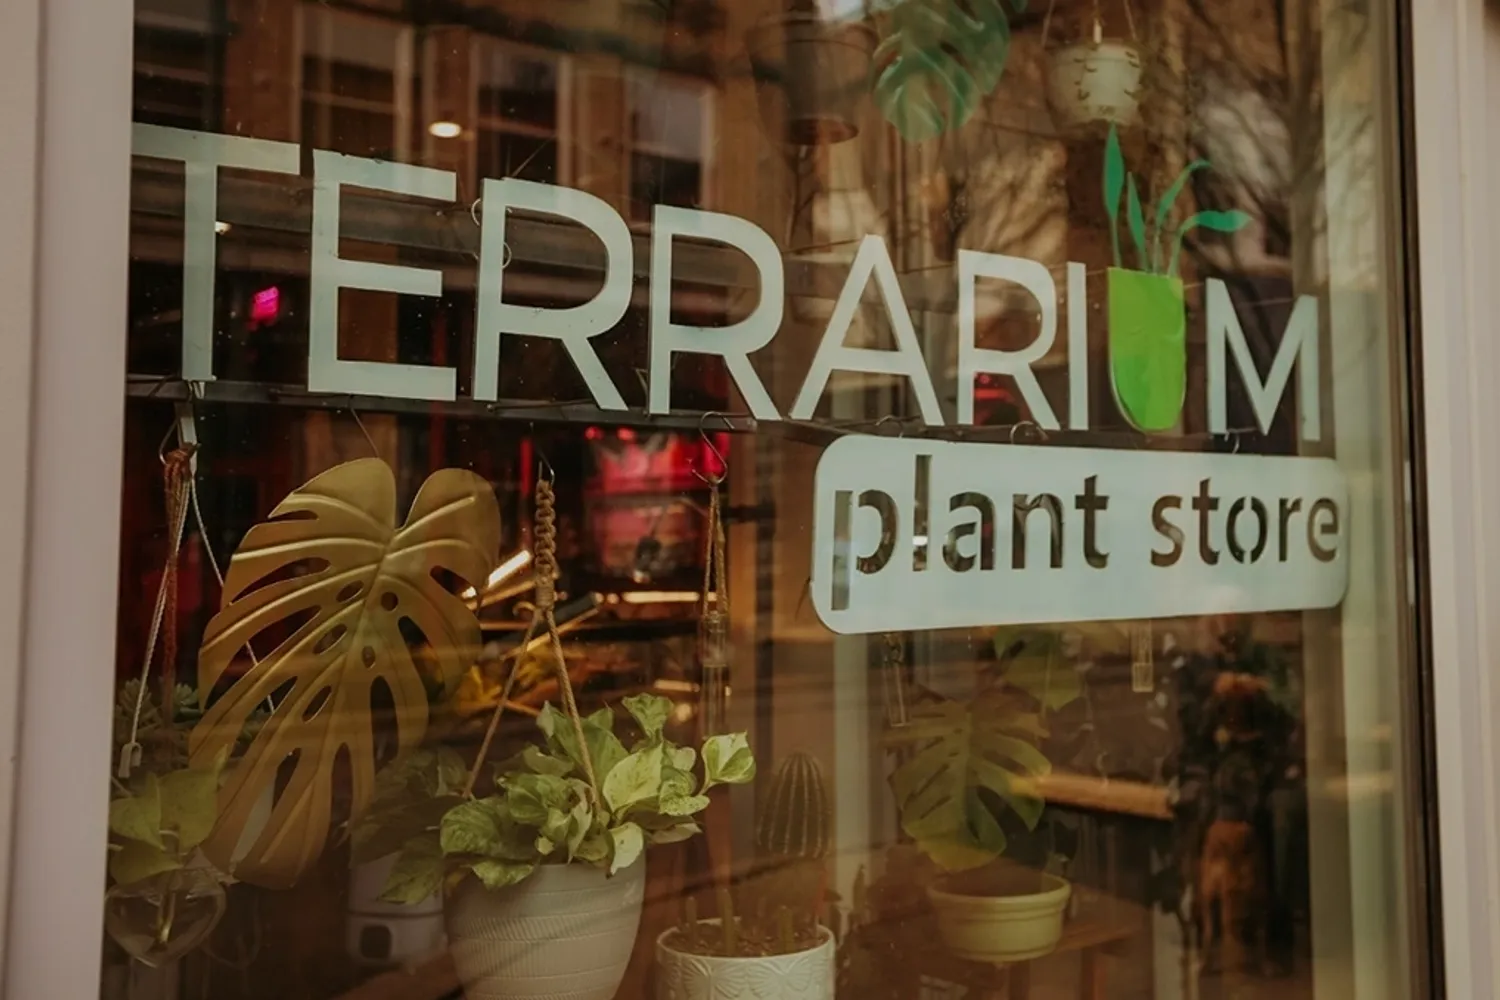 Special Terrarium Plant shops